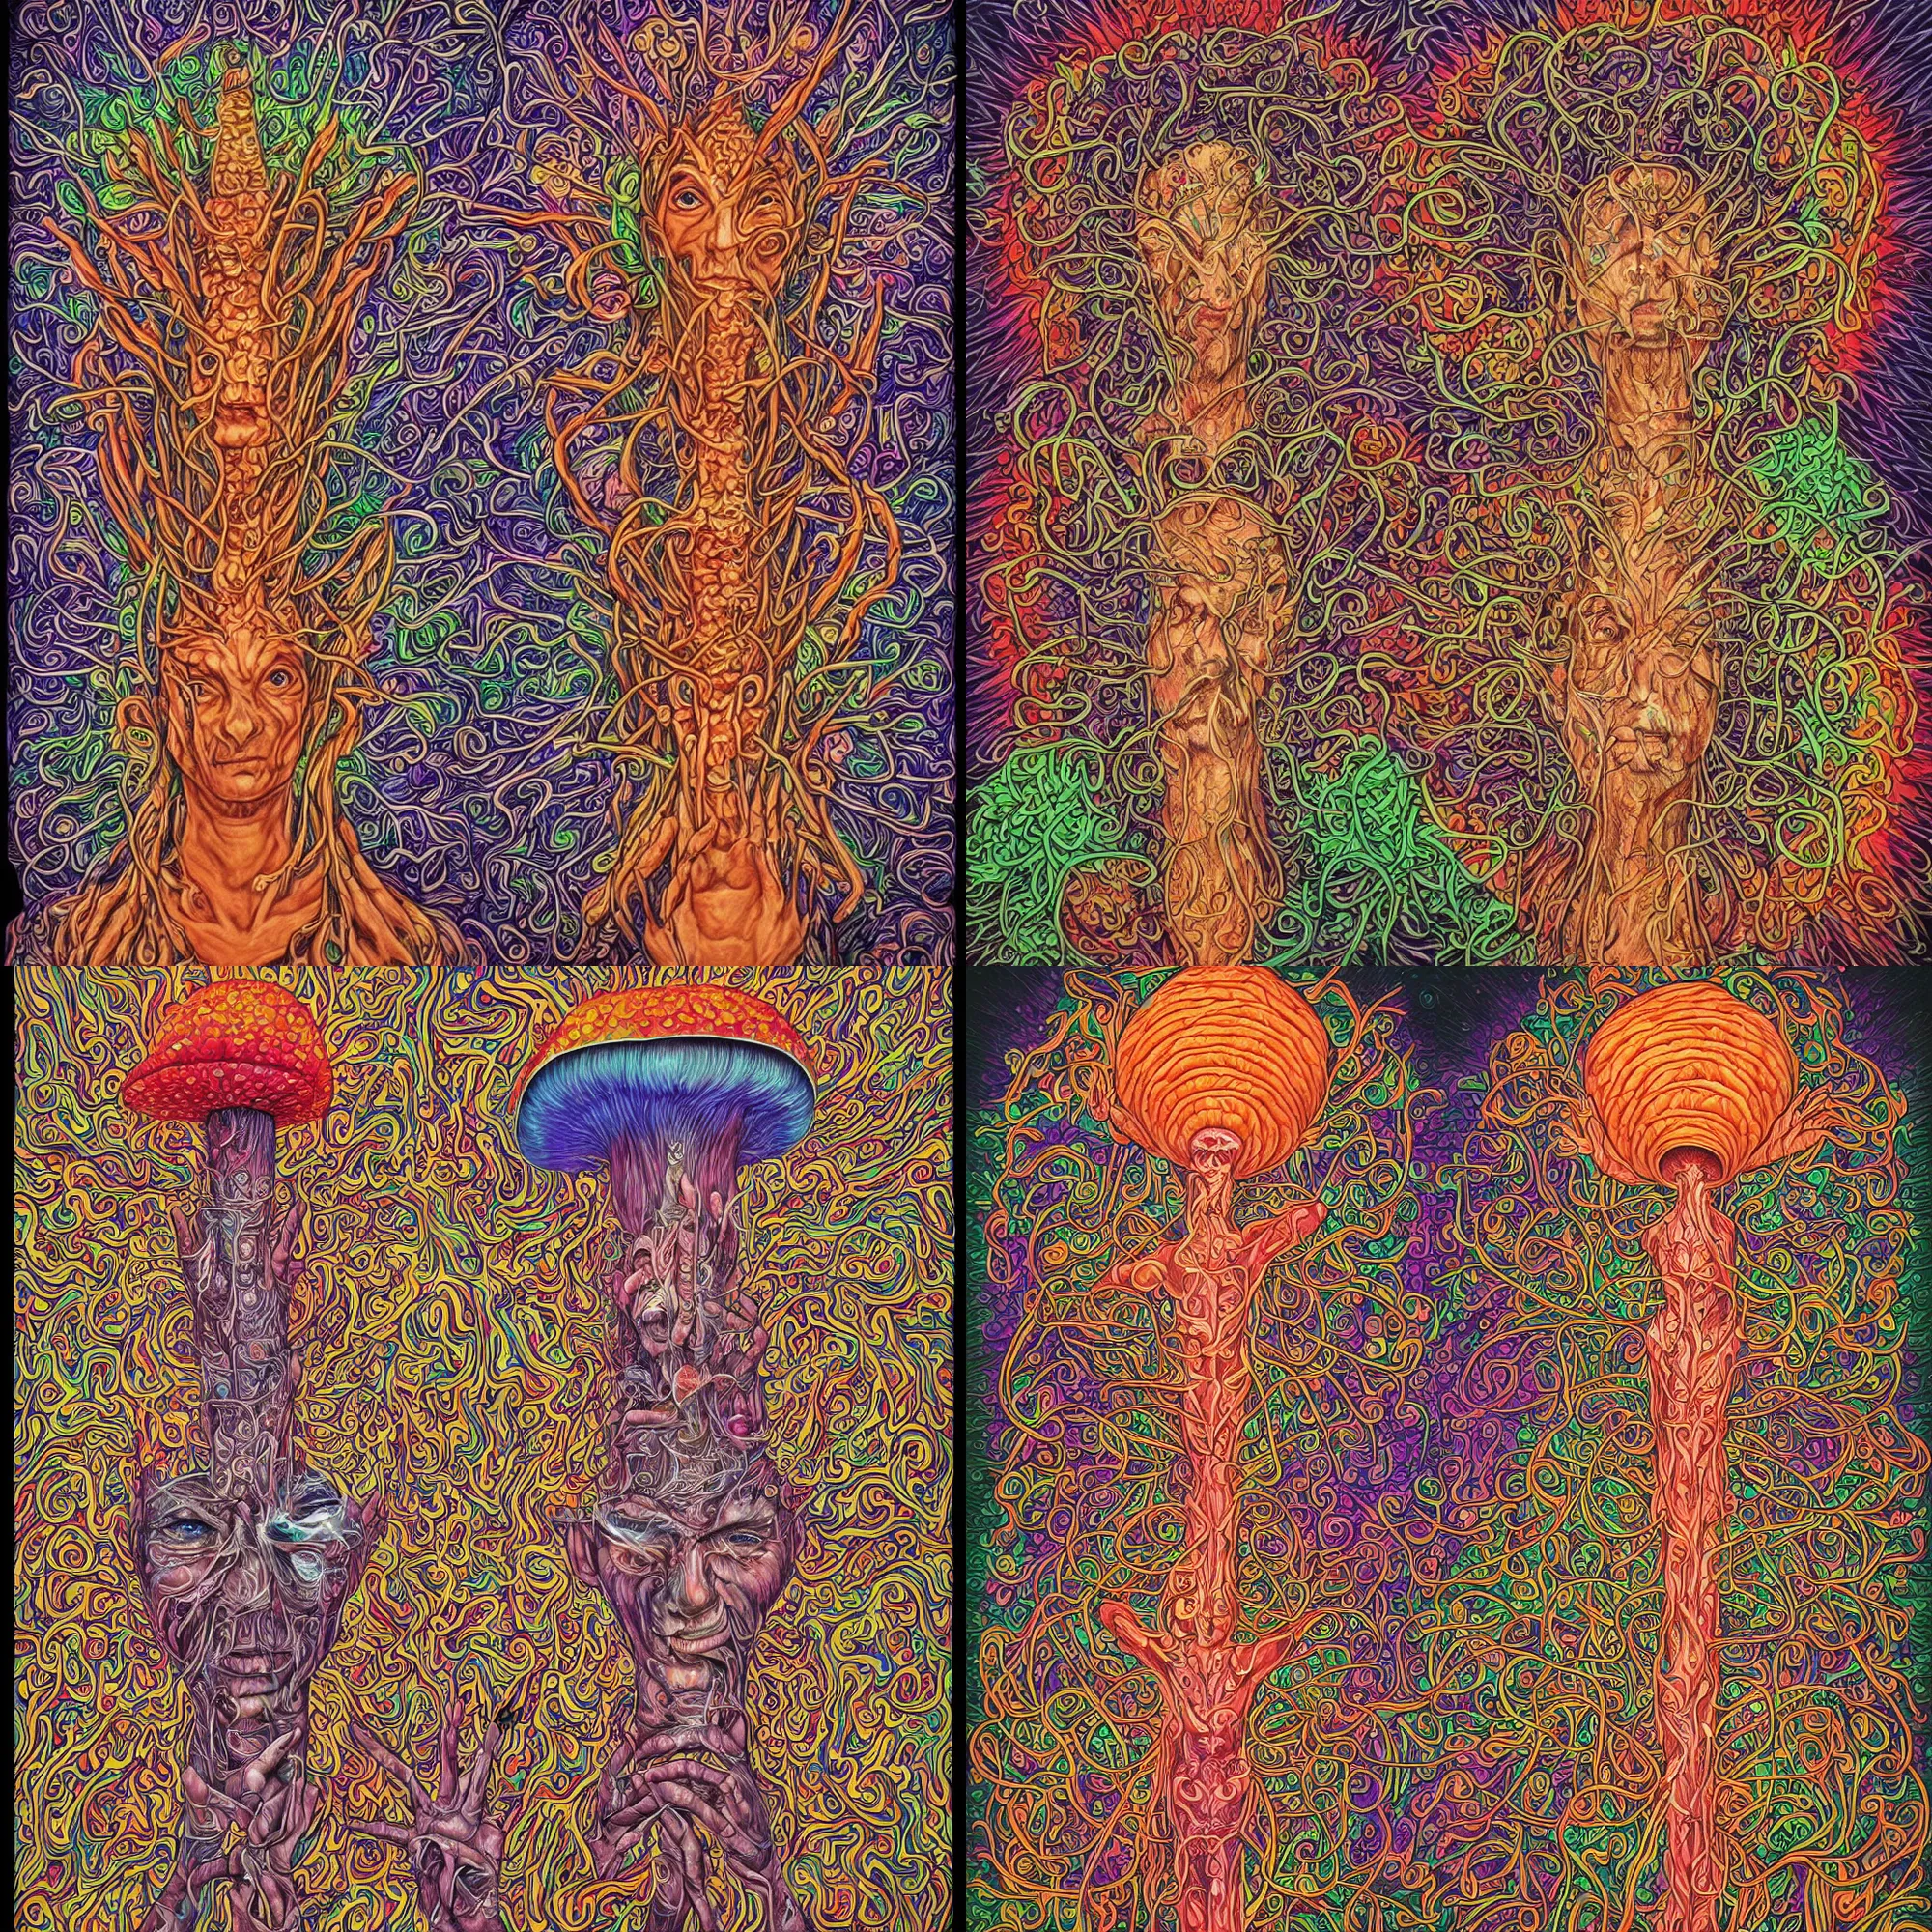 Prompt: an enlightened mushroom shaman by Alex Grey